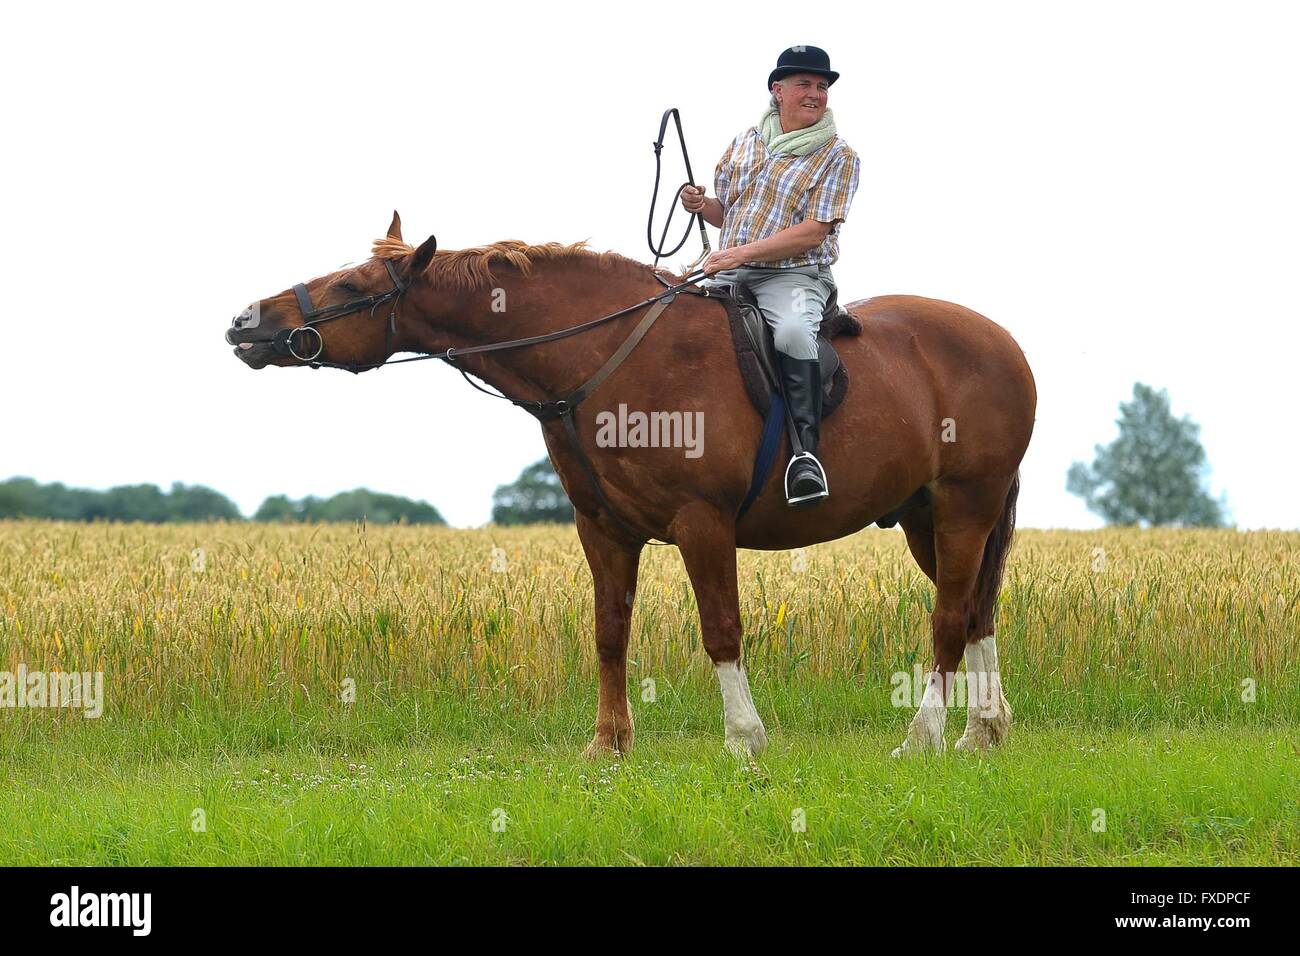 Peleton Mann auf Pferd auf Kante des Feldes folgende Tour 2014 de France uk Roxwell Stockfoto